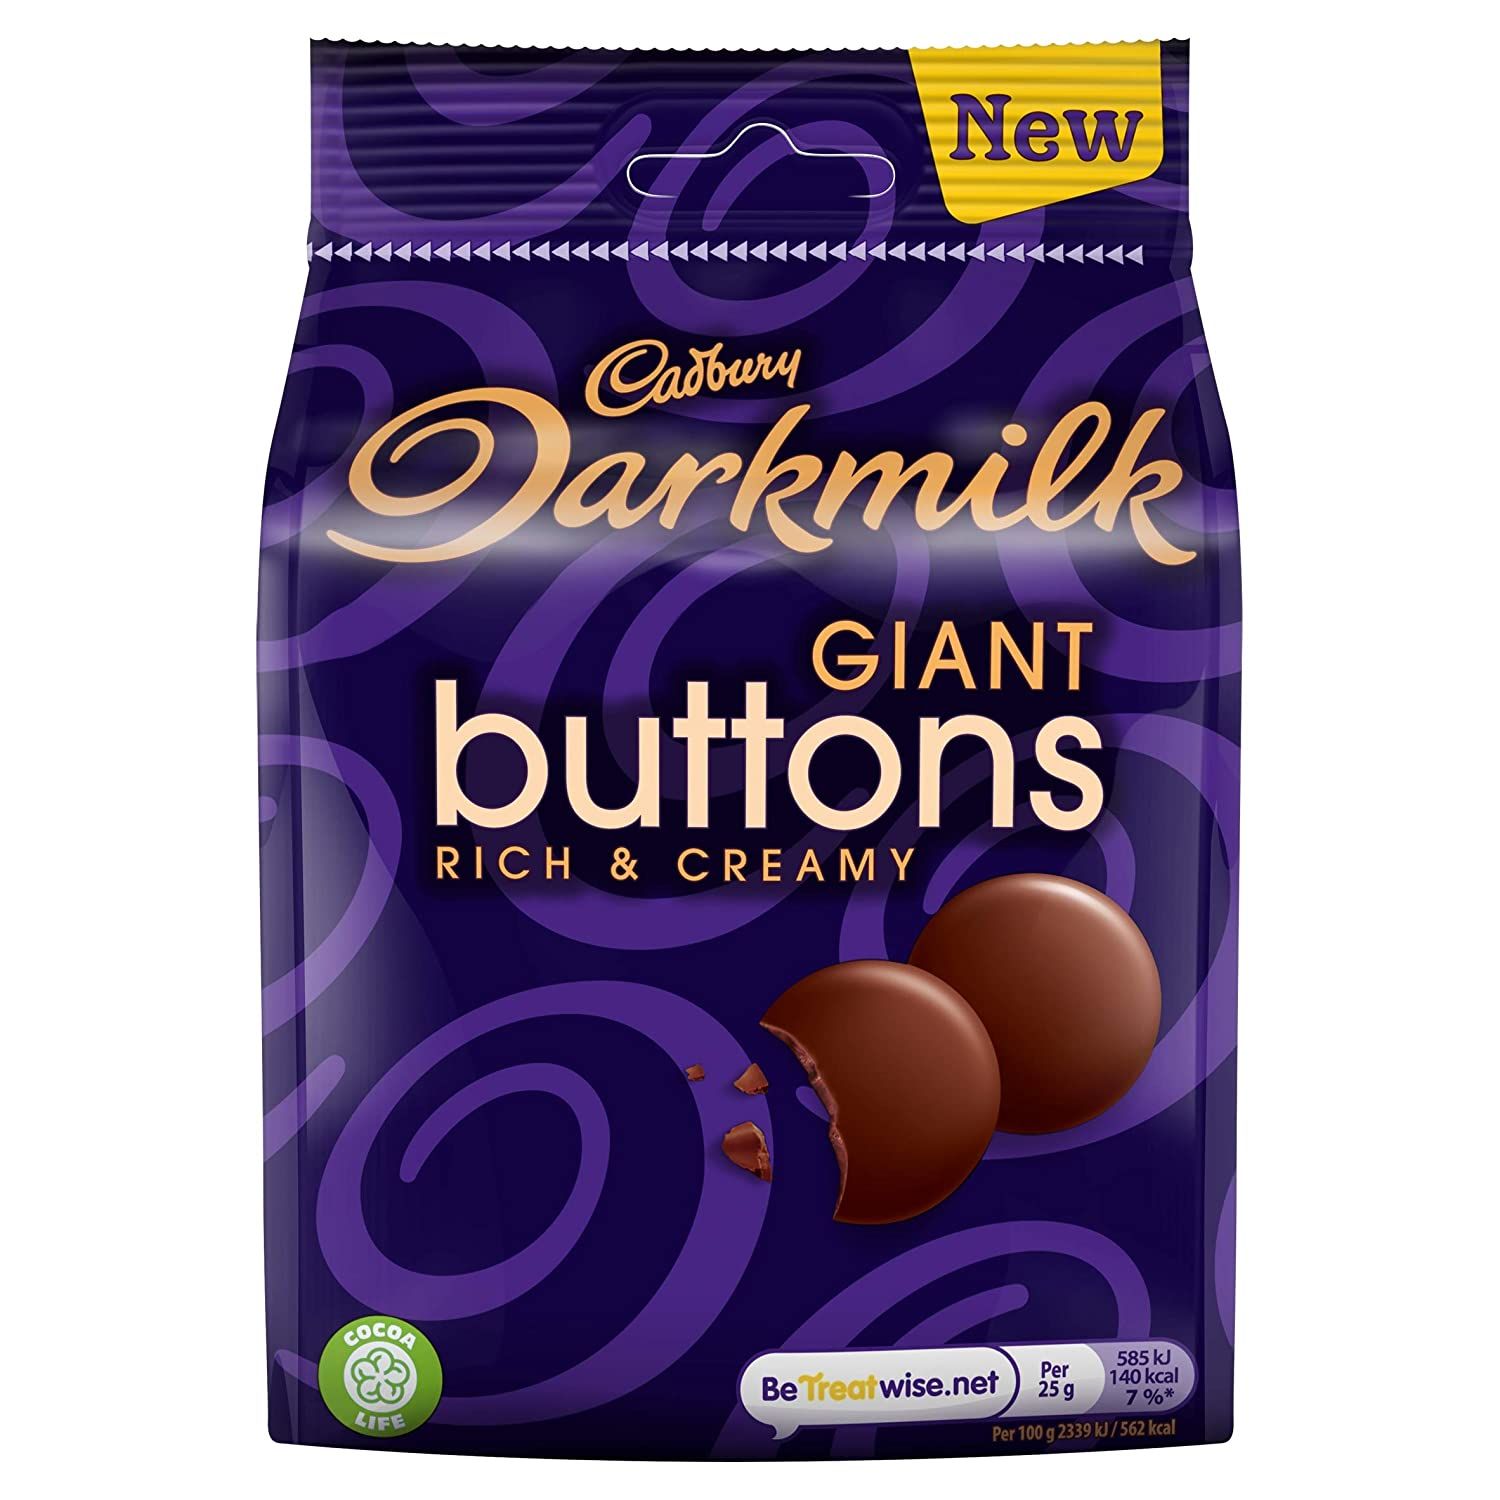 Cadbury Dark milk Giant Buttons Chocolate Image